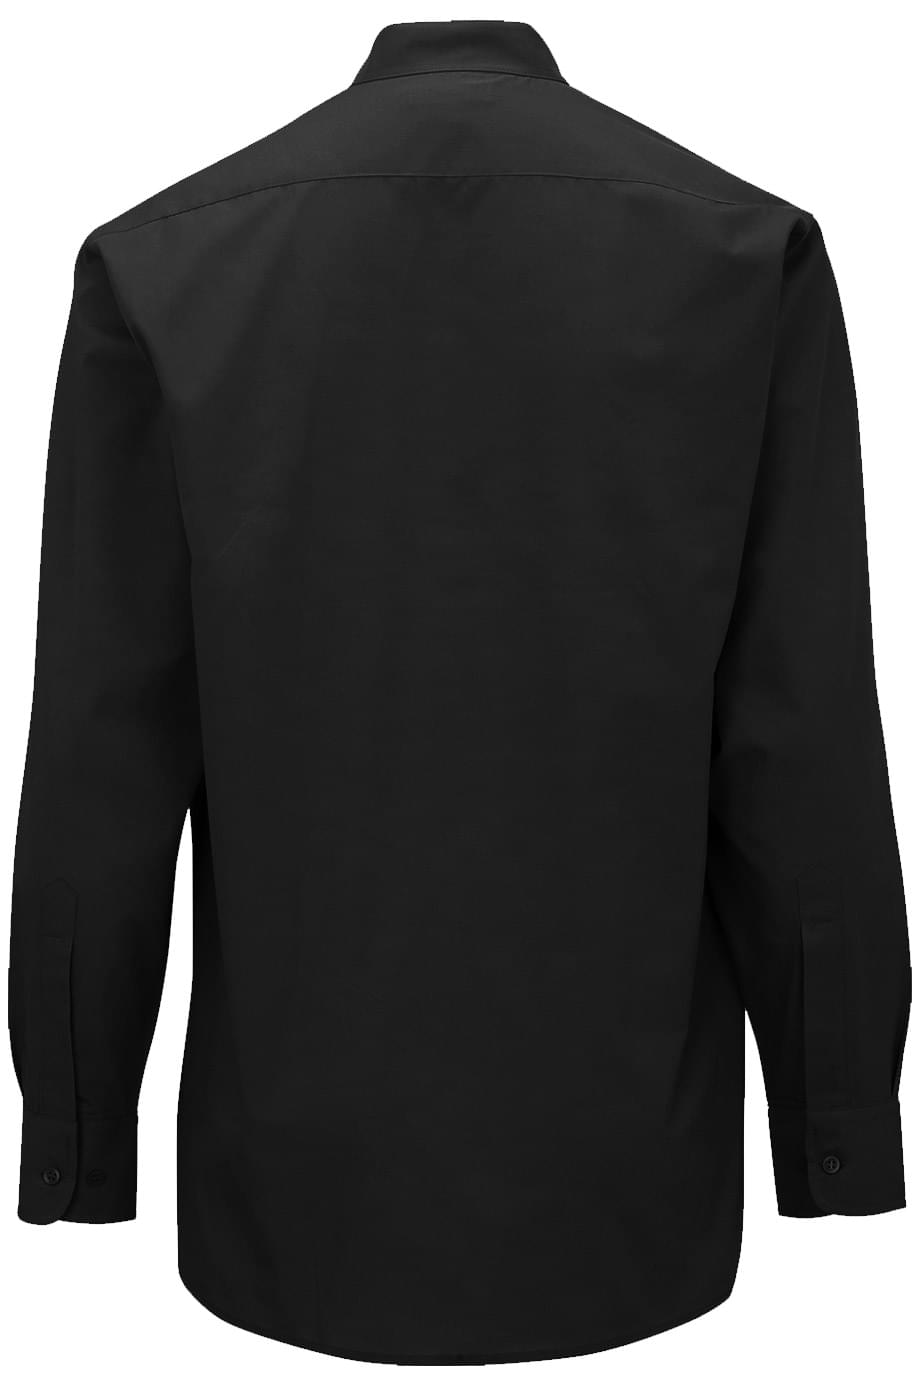 BANDED COLLAR BROADCLOTH SHIRT | Edwards Garment